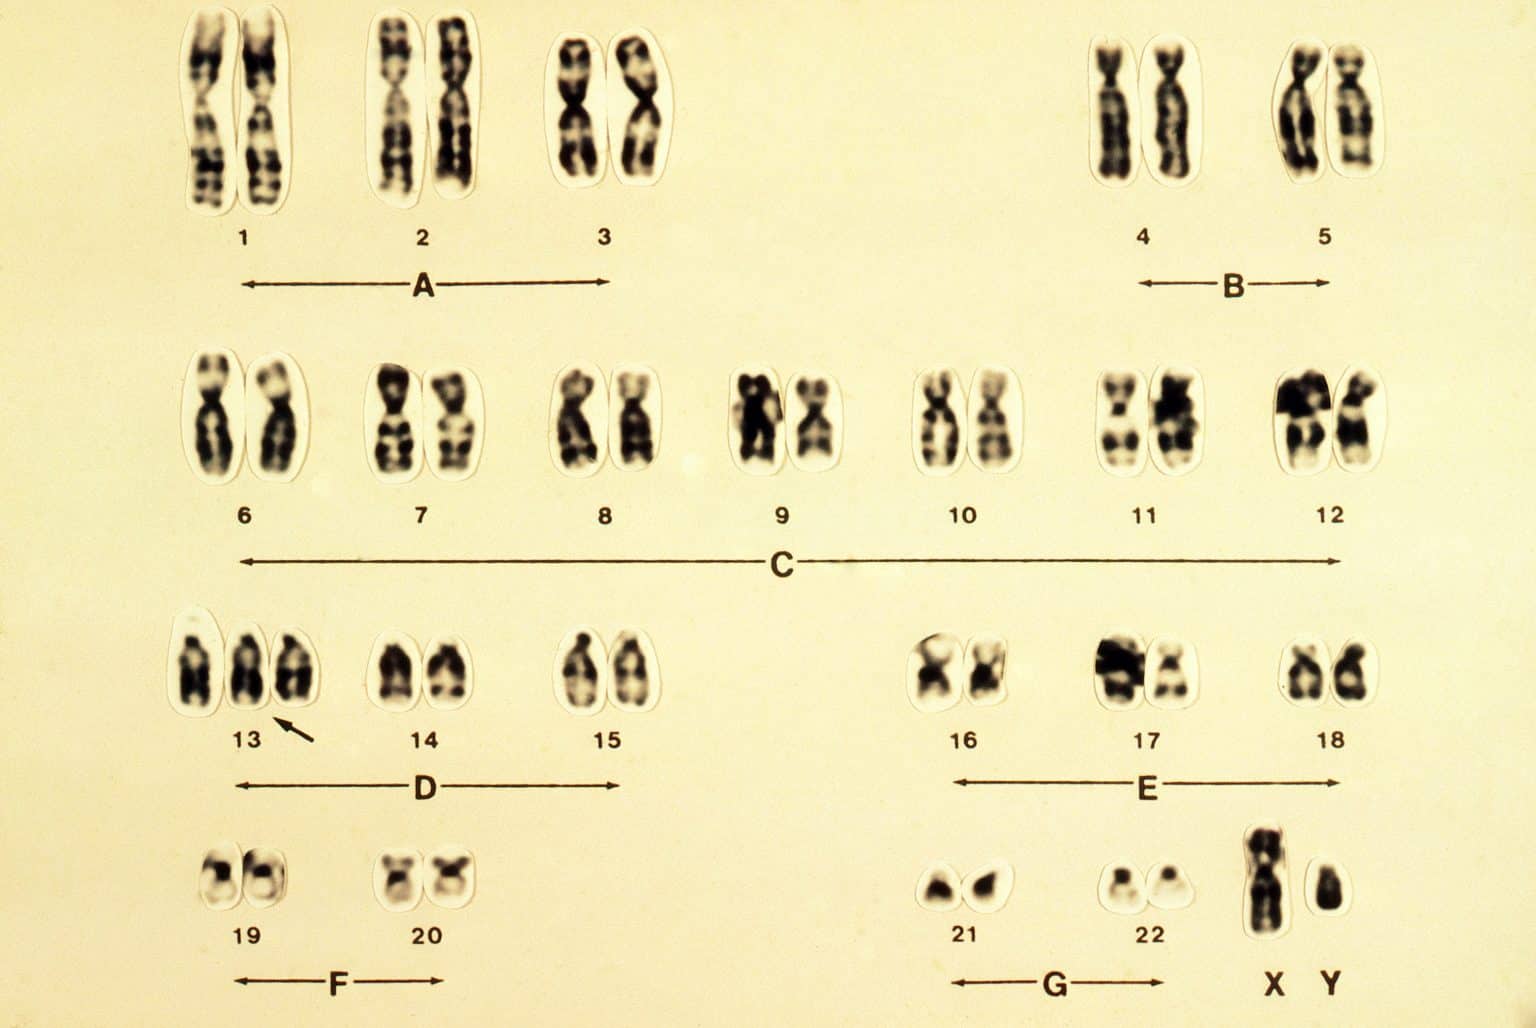 Карта х хромосомы человека